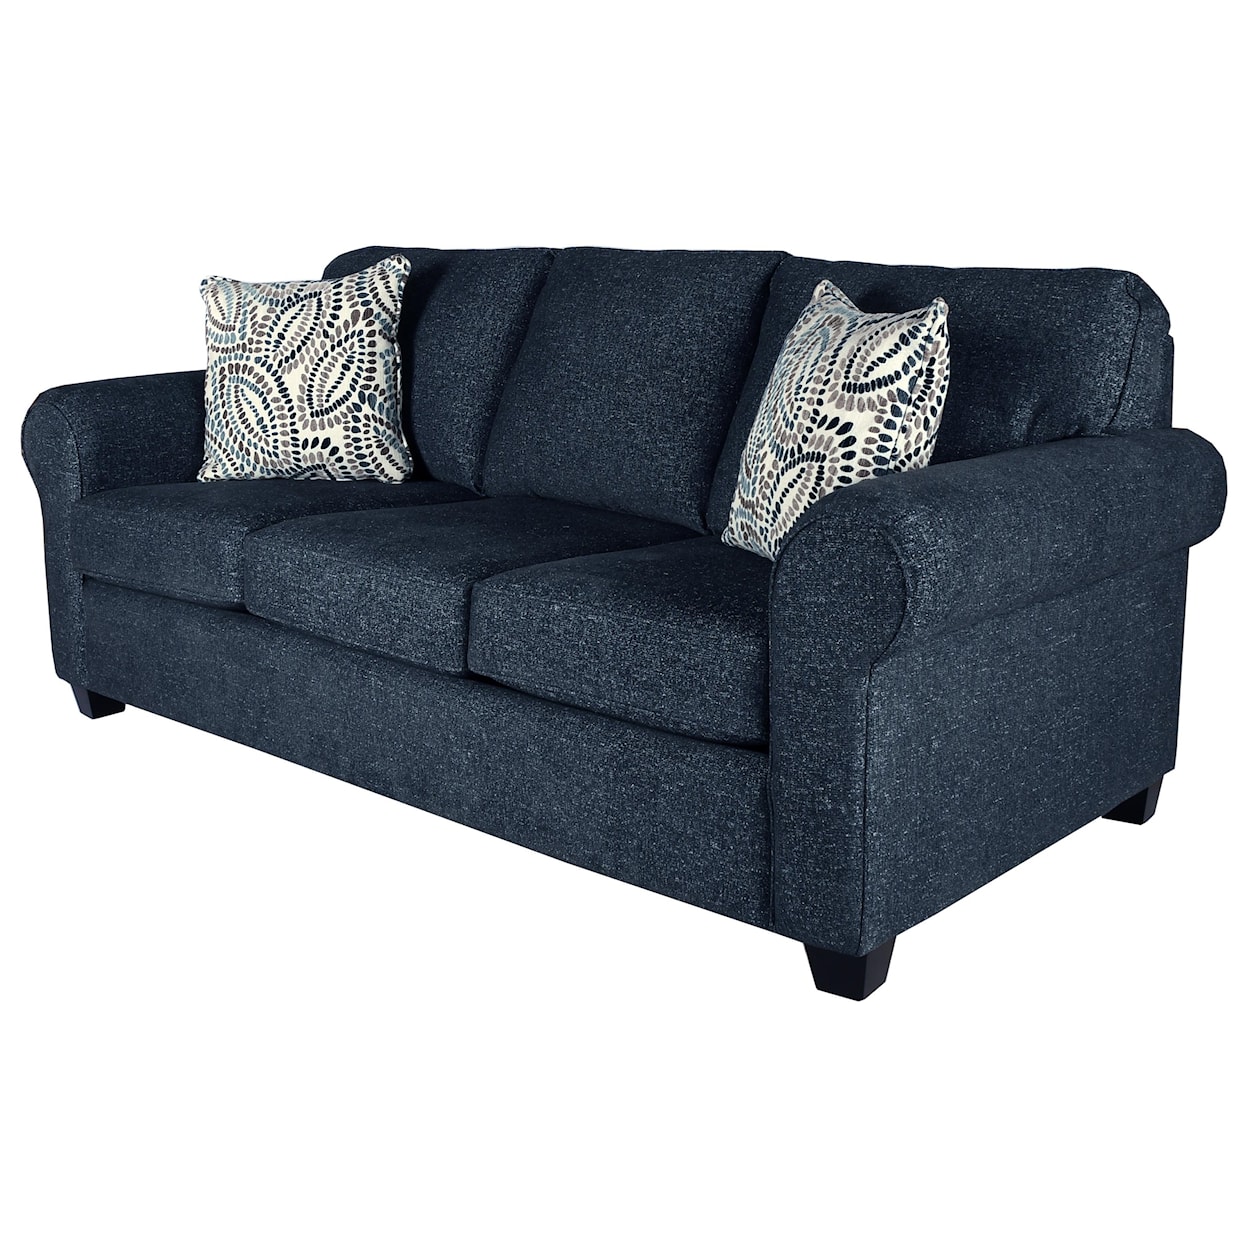 Taelor Designs Porter Sofa